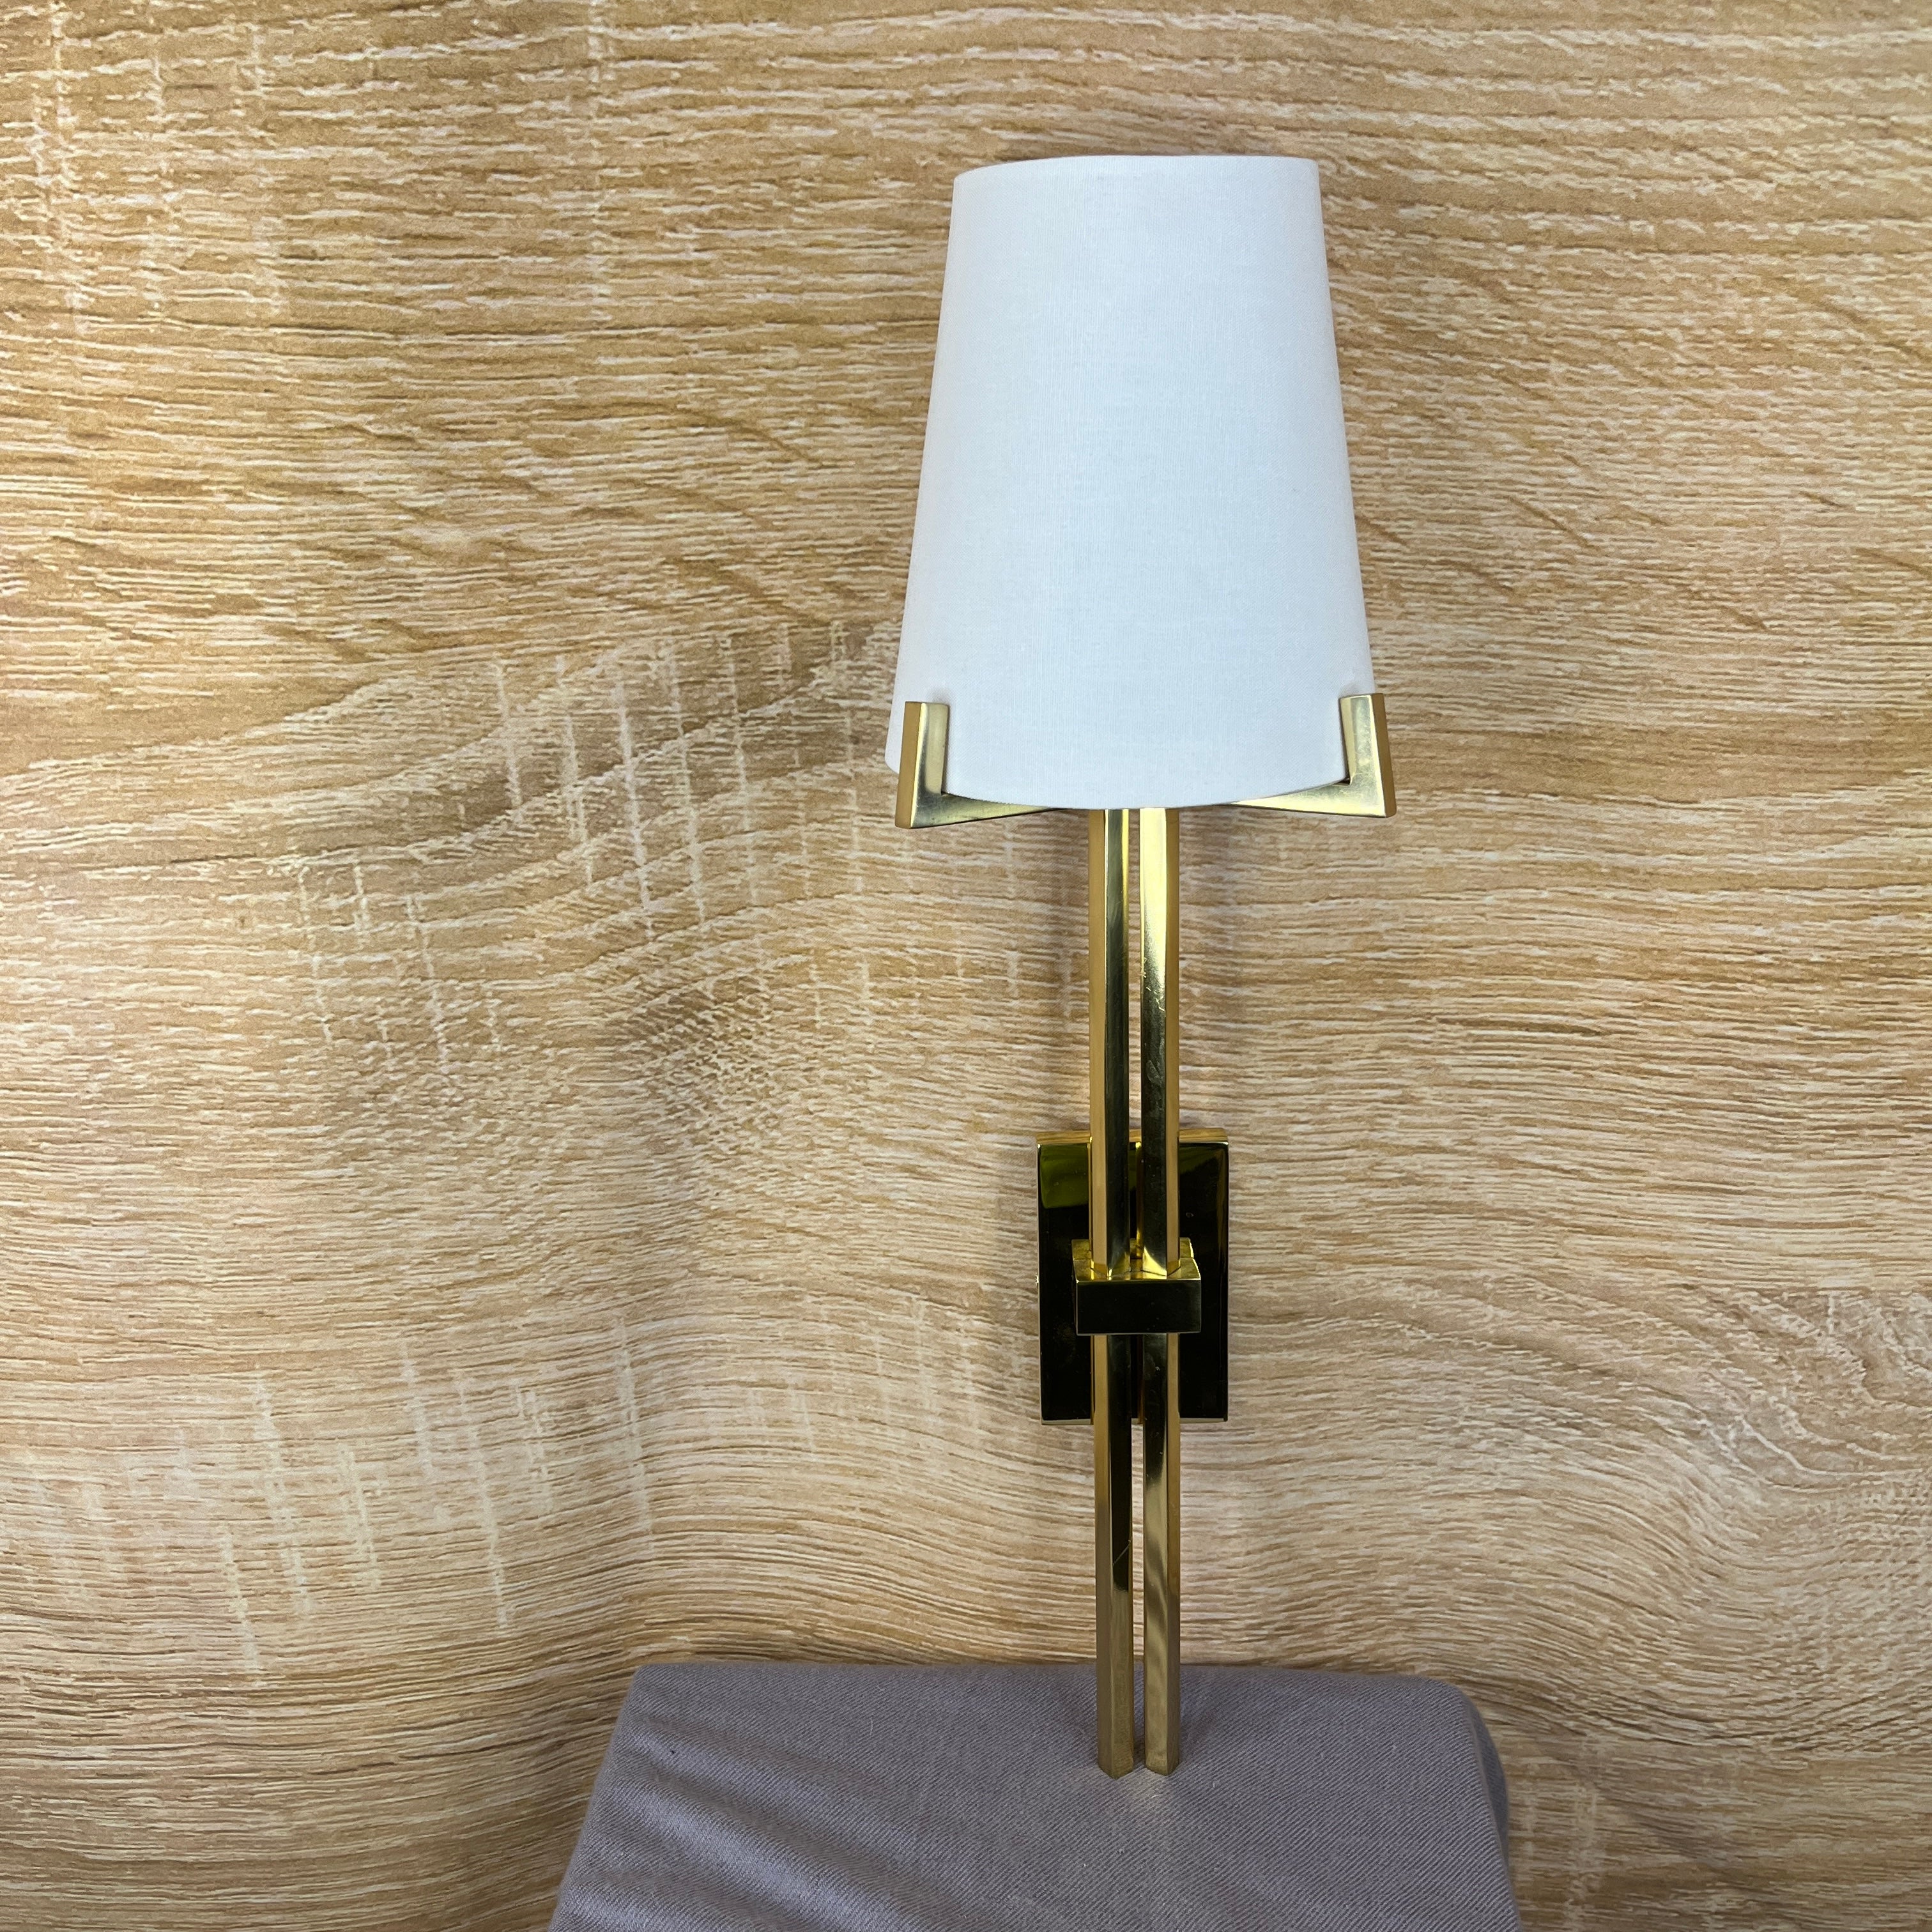 1-Light Brass with Linen Shade Wall Sconce 6"x 21"x 3.5"